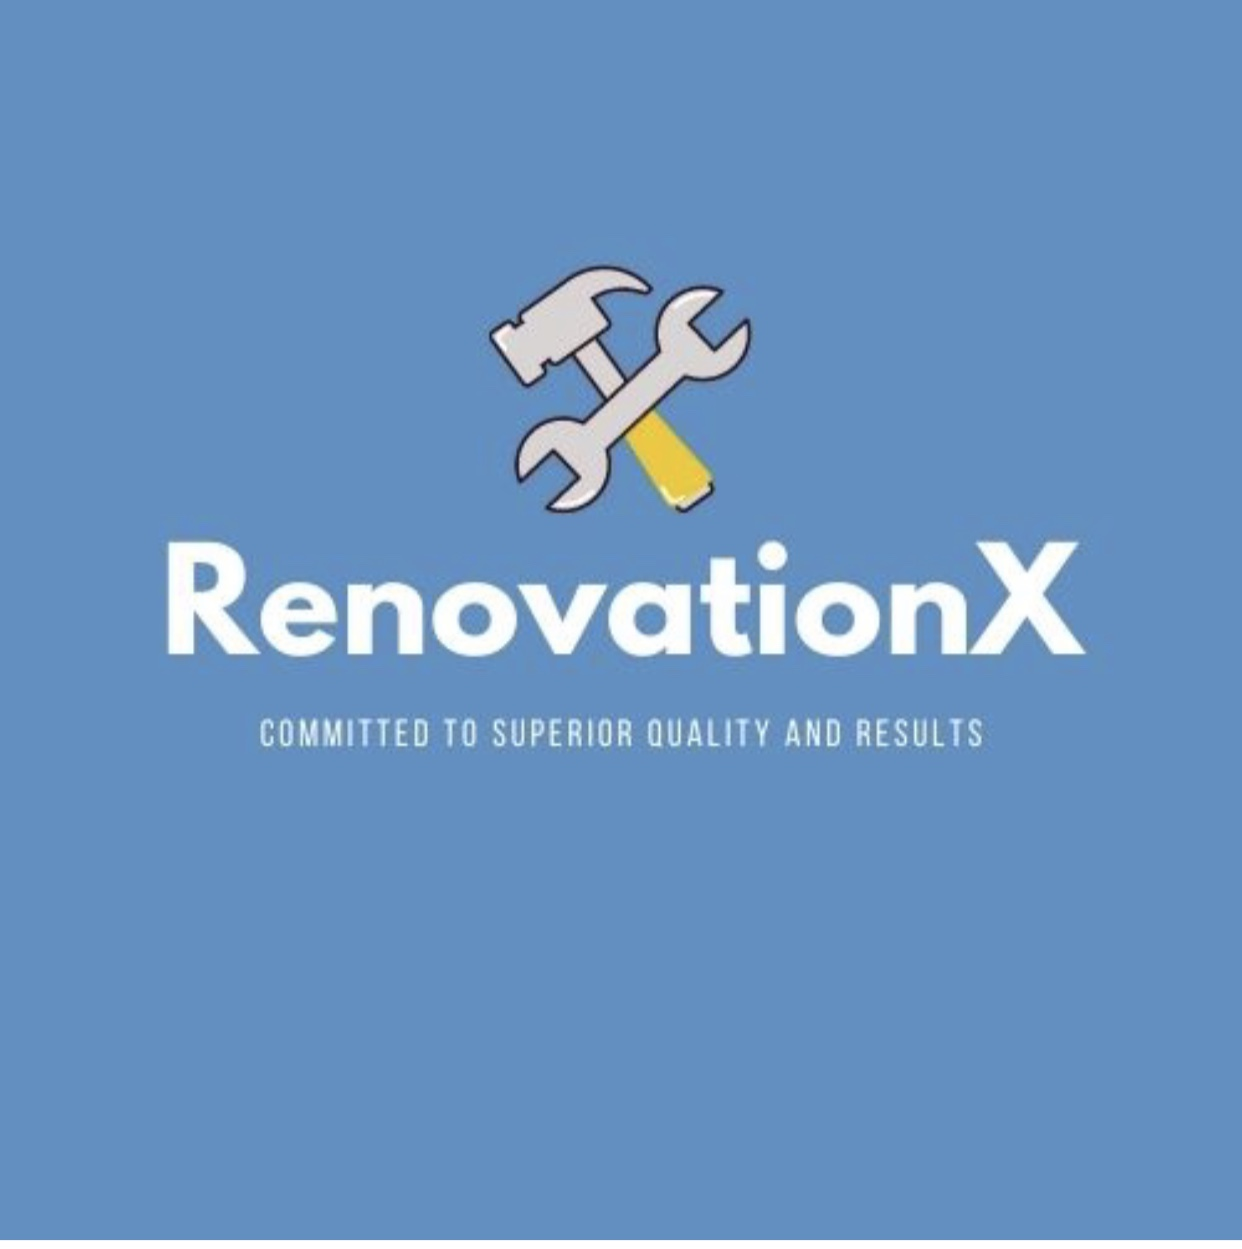 Renovation X Inc.'s logo